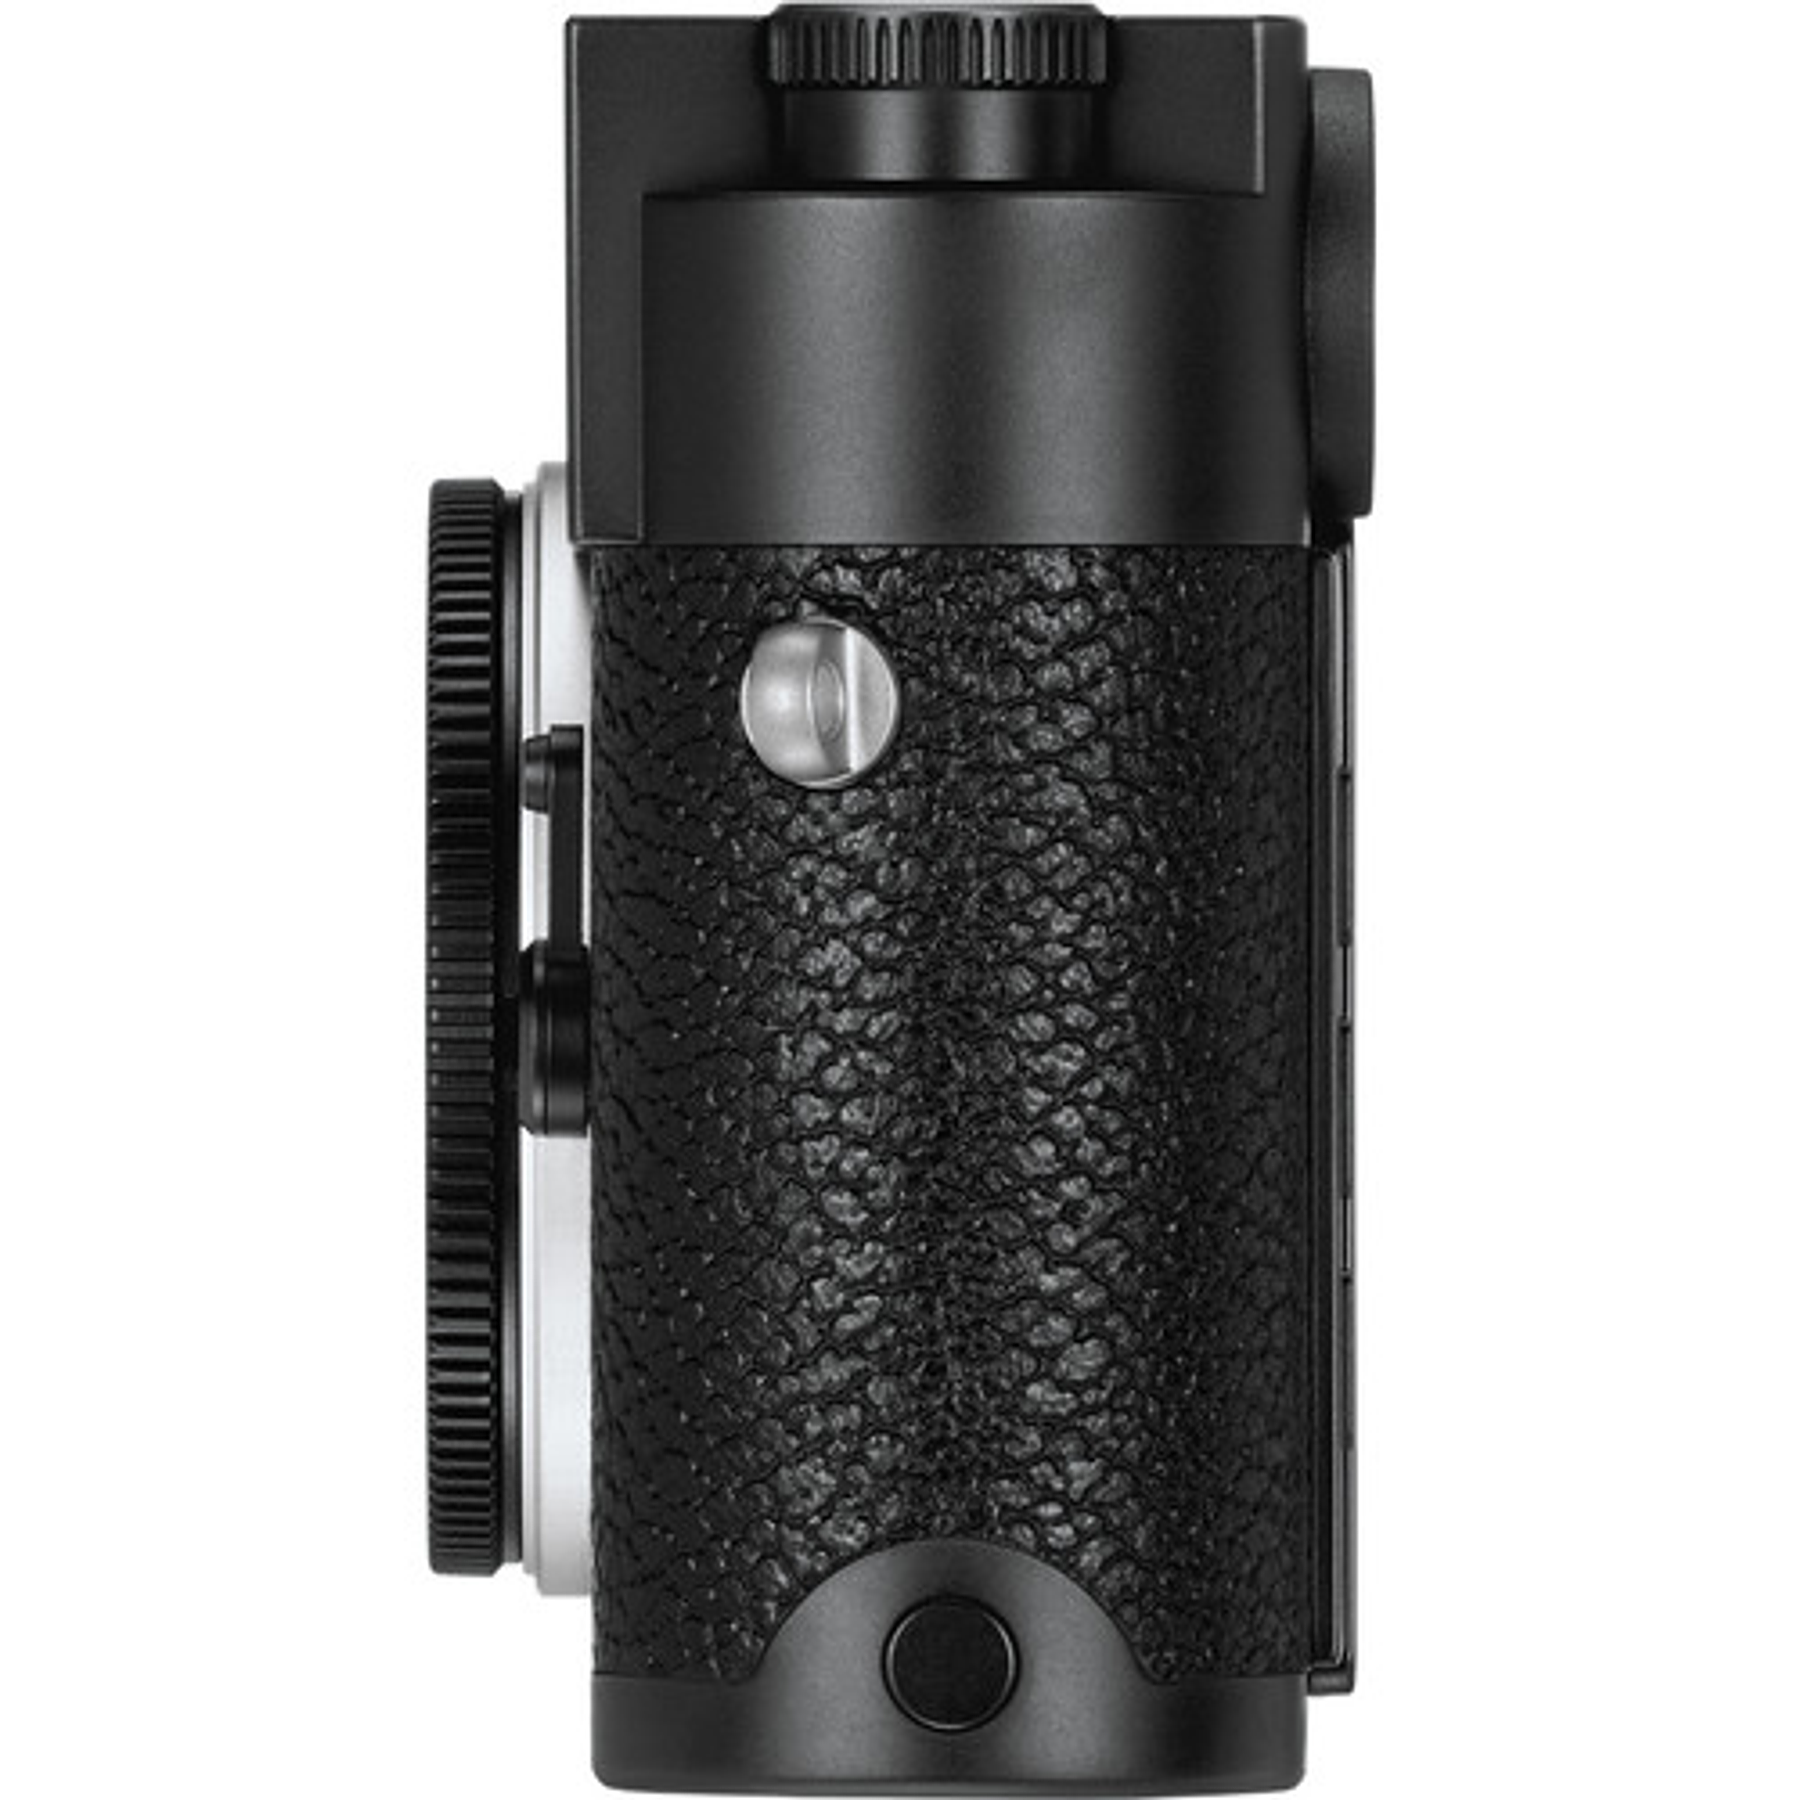 Leica M10-P Digital Rangefinder (Black Chrome)